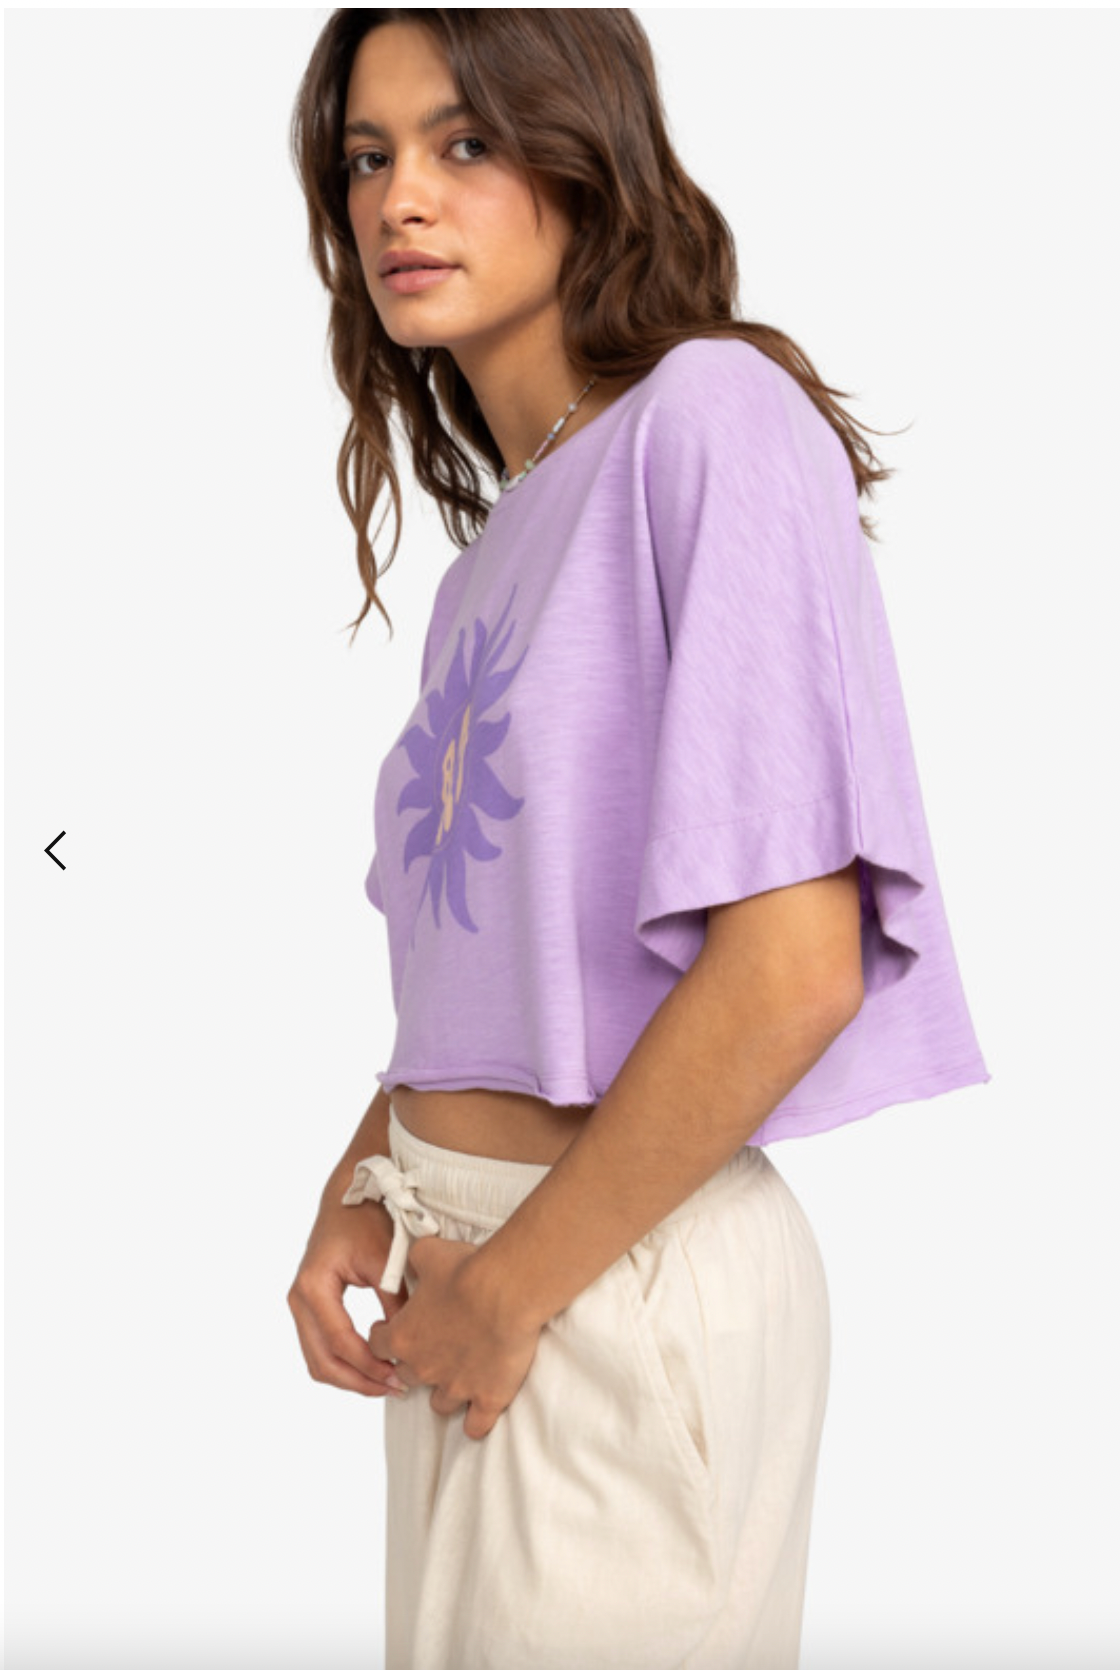 ROXY Tiki & Surf - Oversized T-Shirt for Women